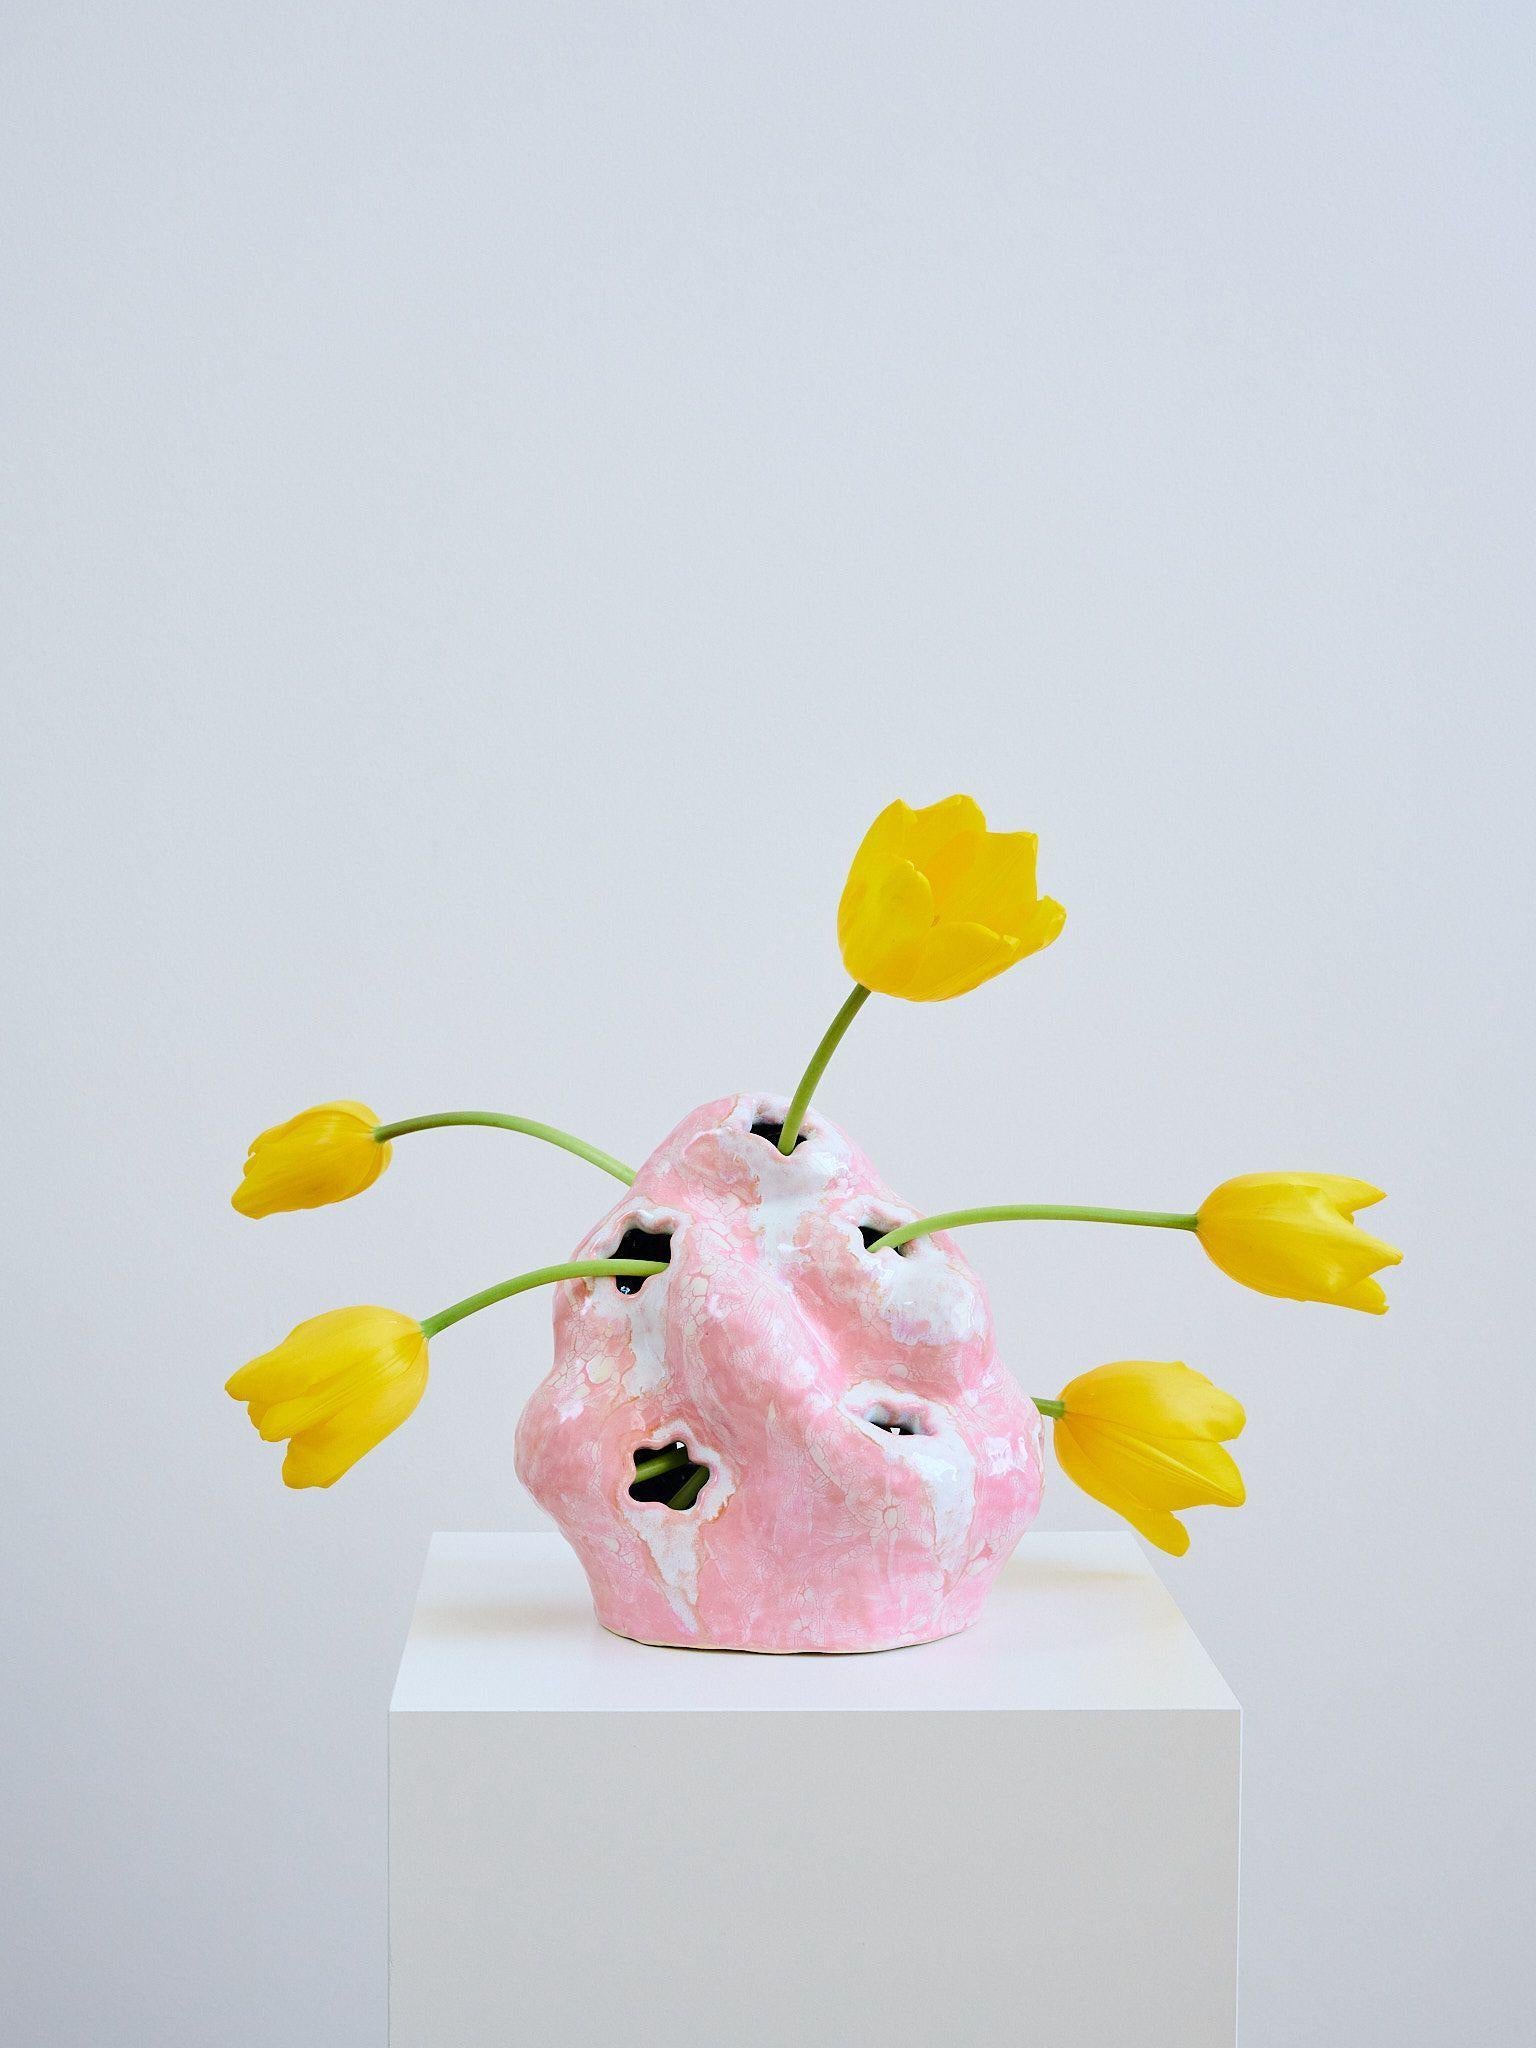 Canadian Unique Pink and White Glazed Ceramic Tulipiere or Flower Vase